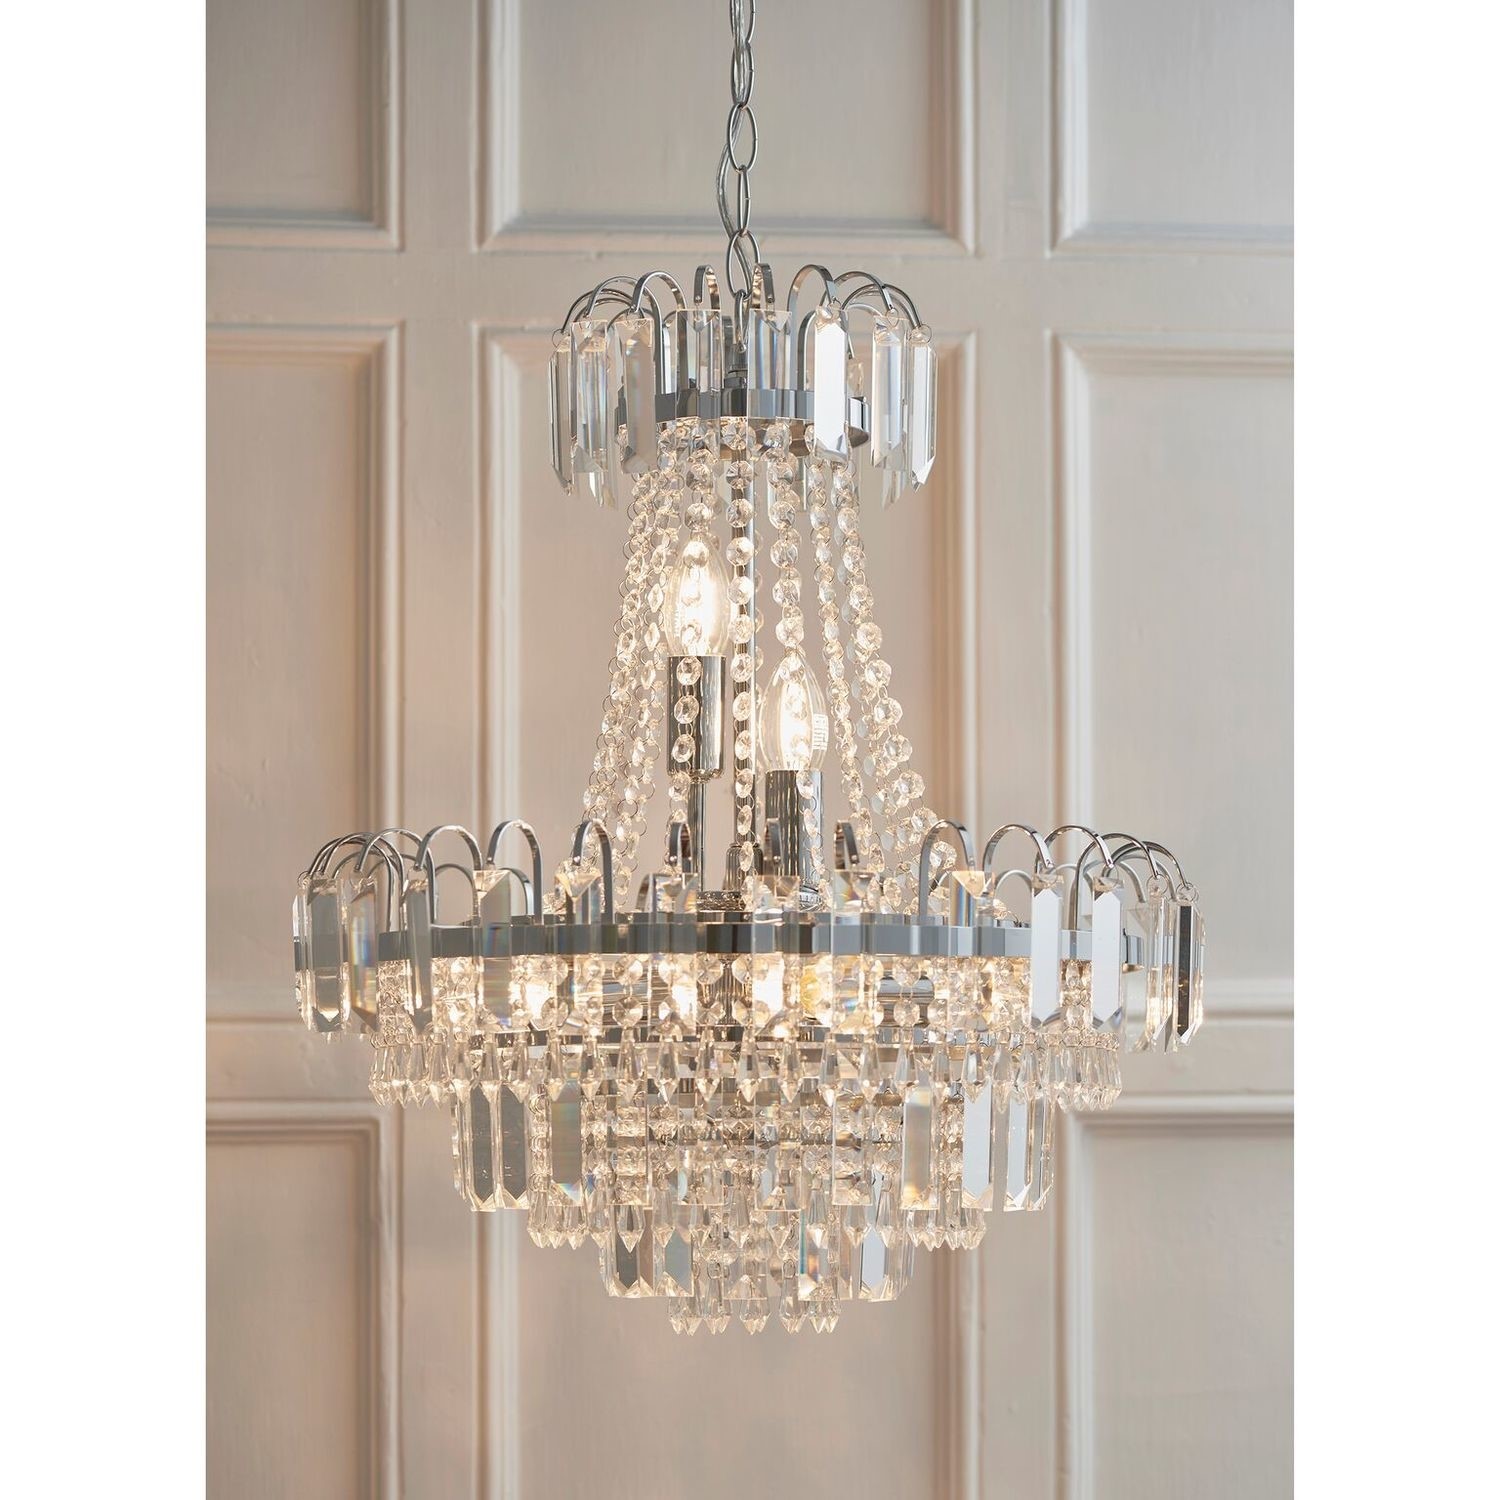 Amadis 6 light crystal chandelier